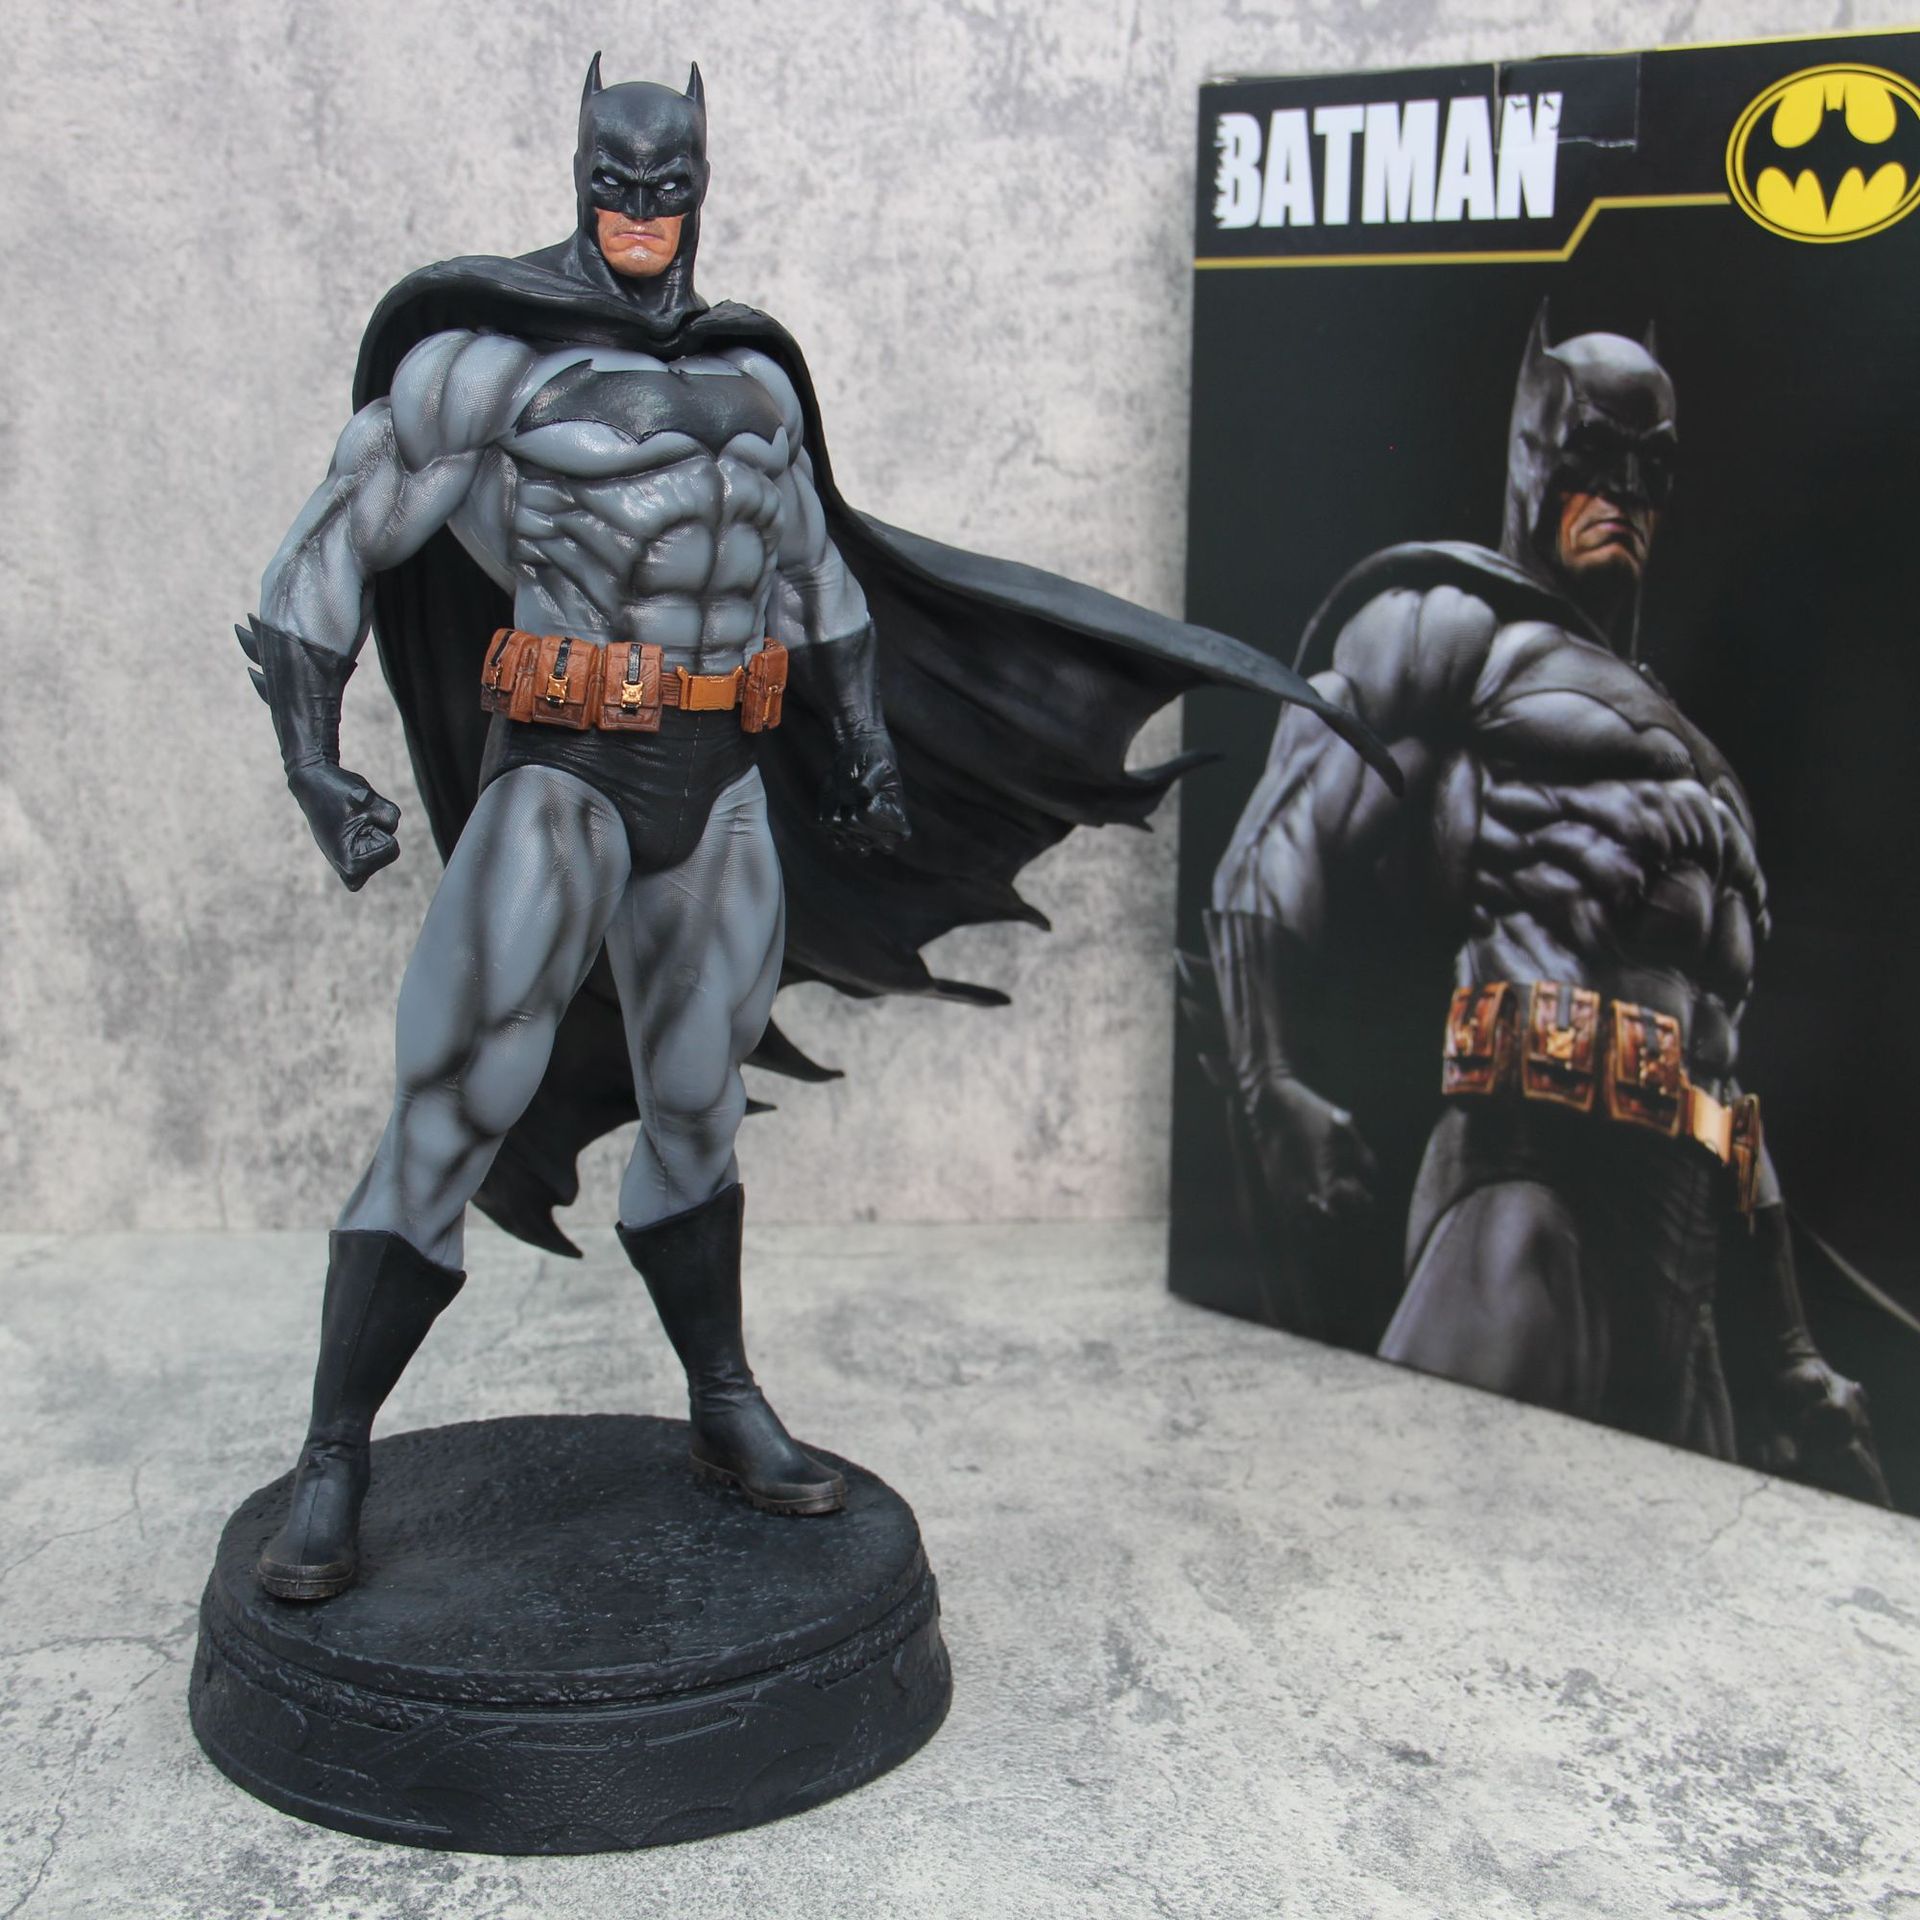 thumbnail for Batman hand-made DC Meiman Dark Knight GK model Justice League statue scene decoration gift wholesale